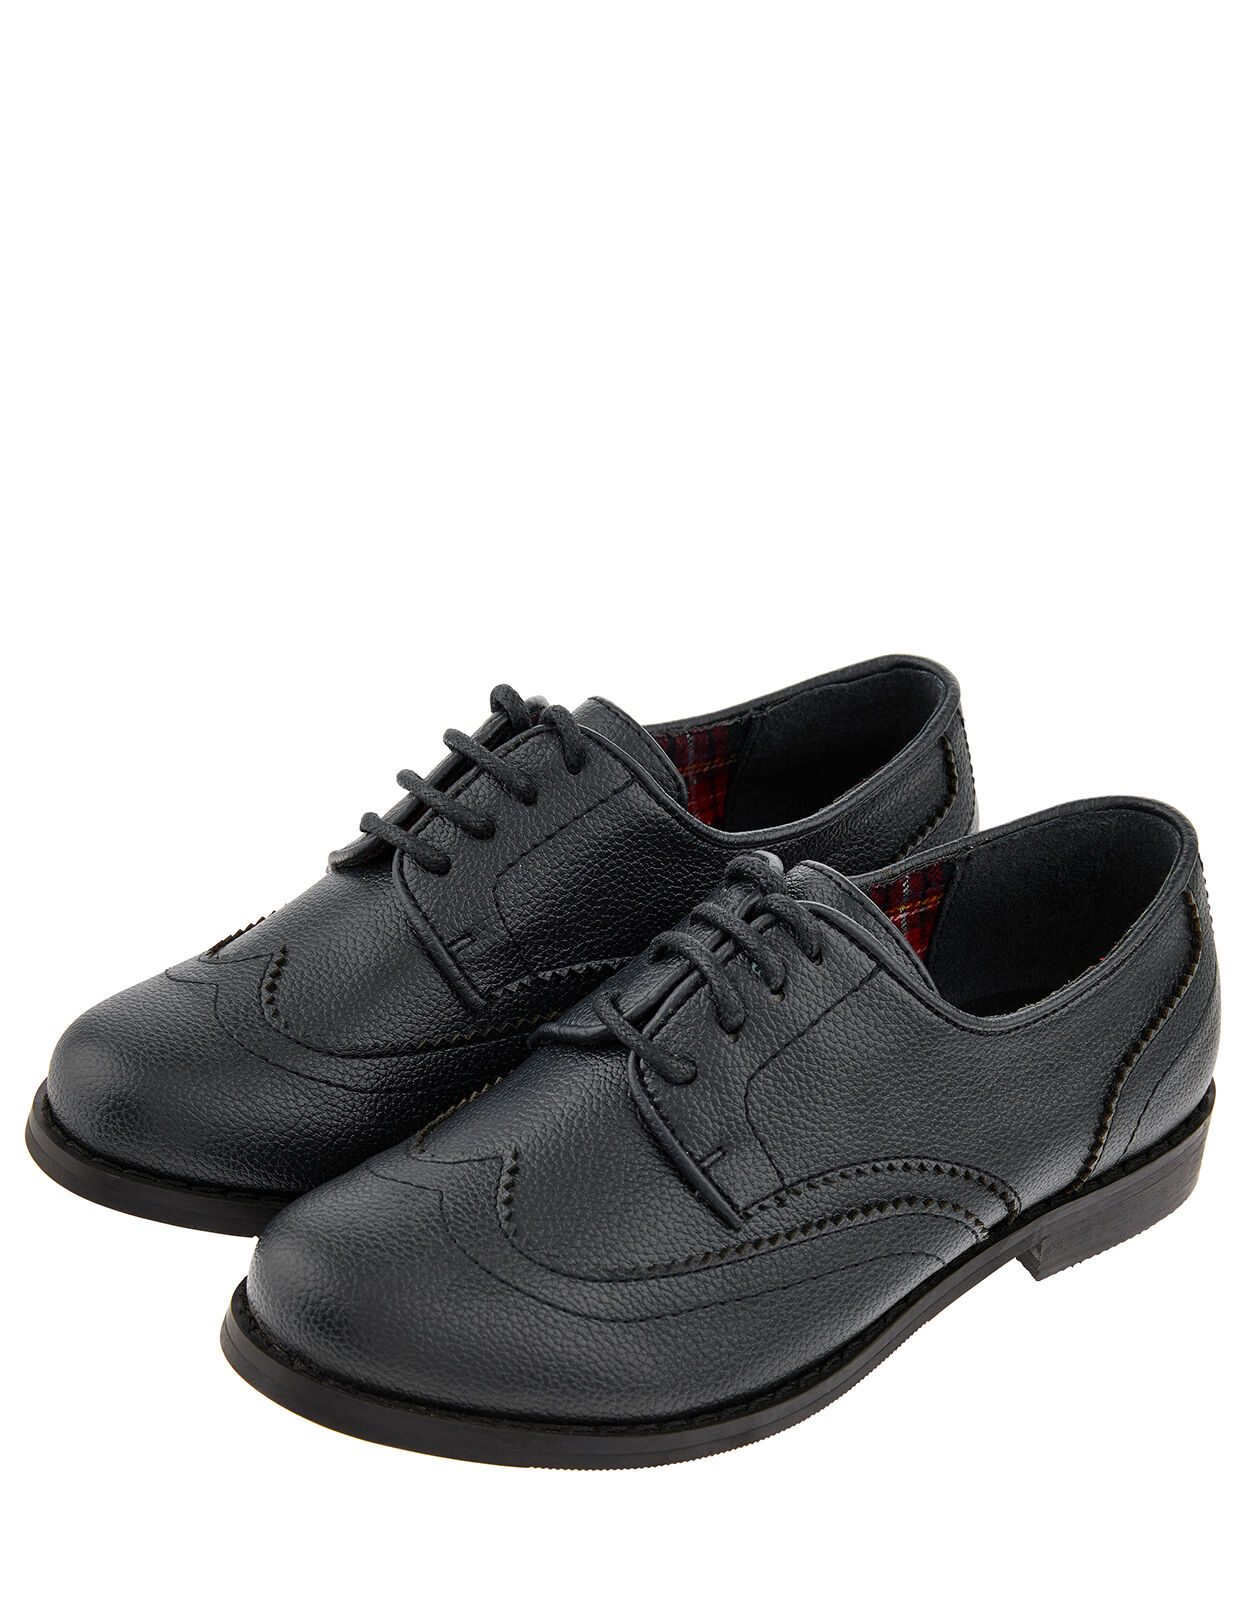 Boys' Oxford Brogue Shoes Black | Boys 